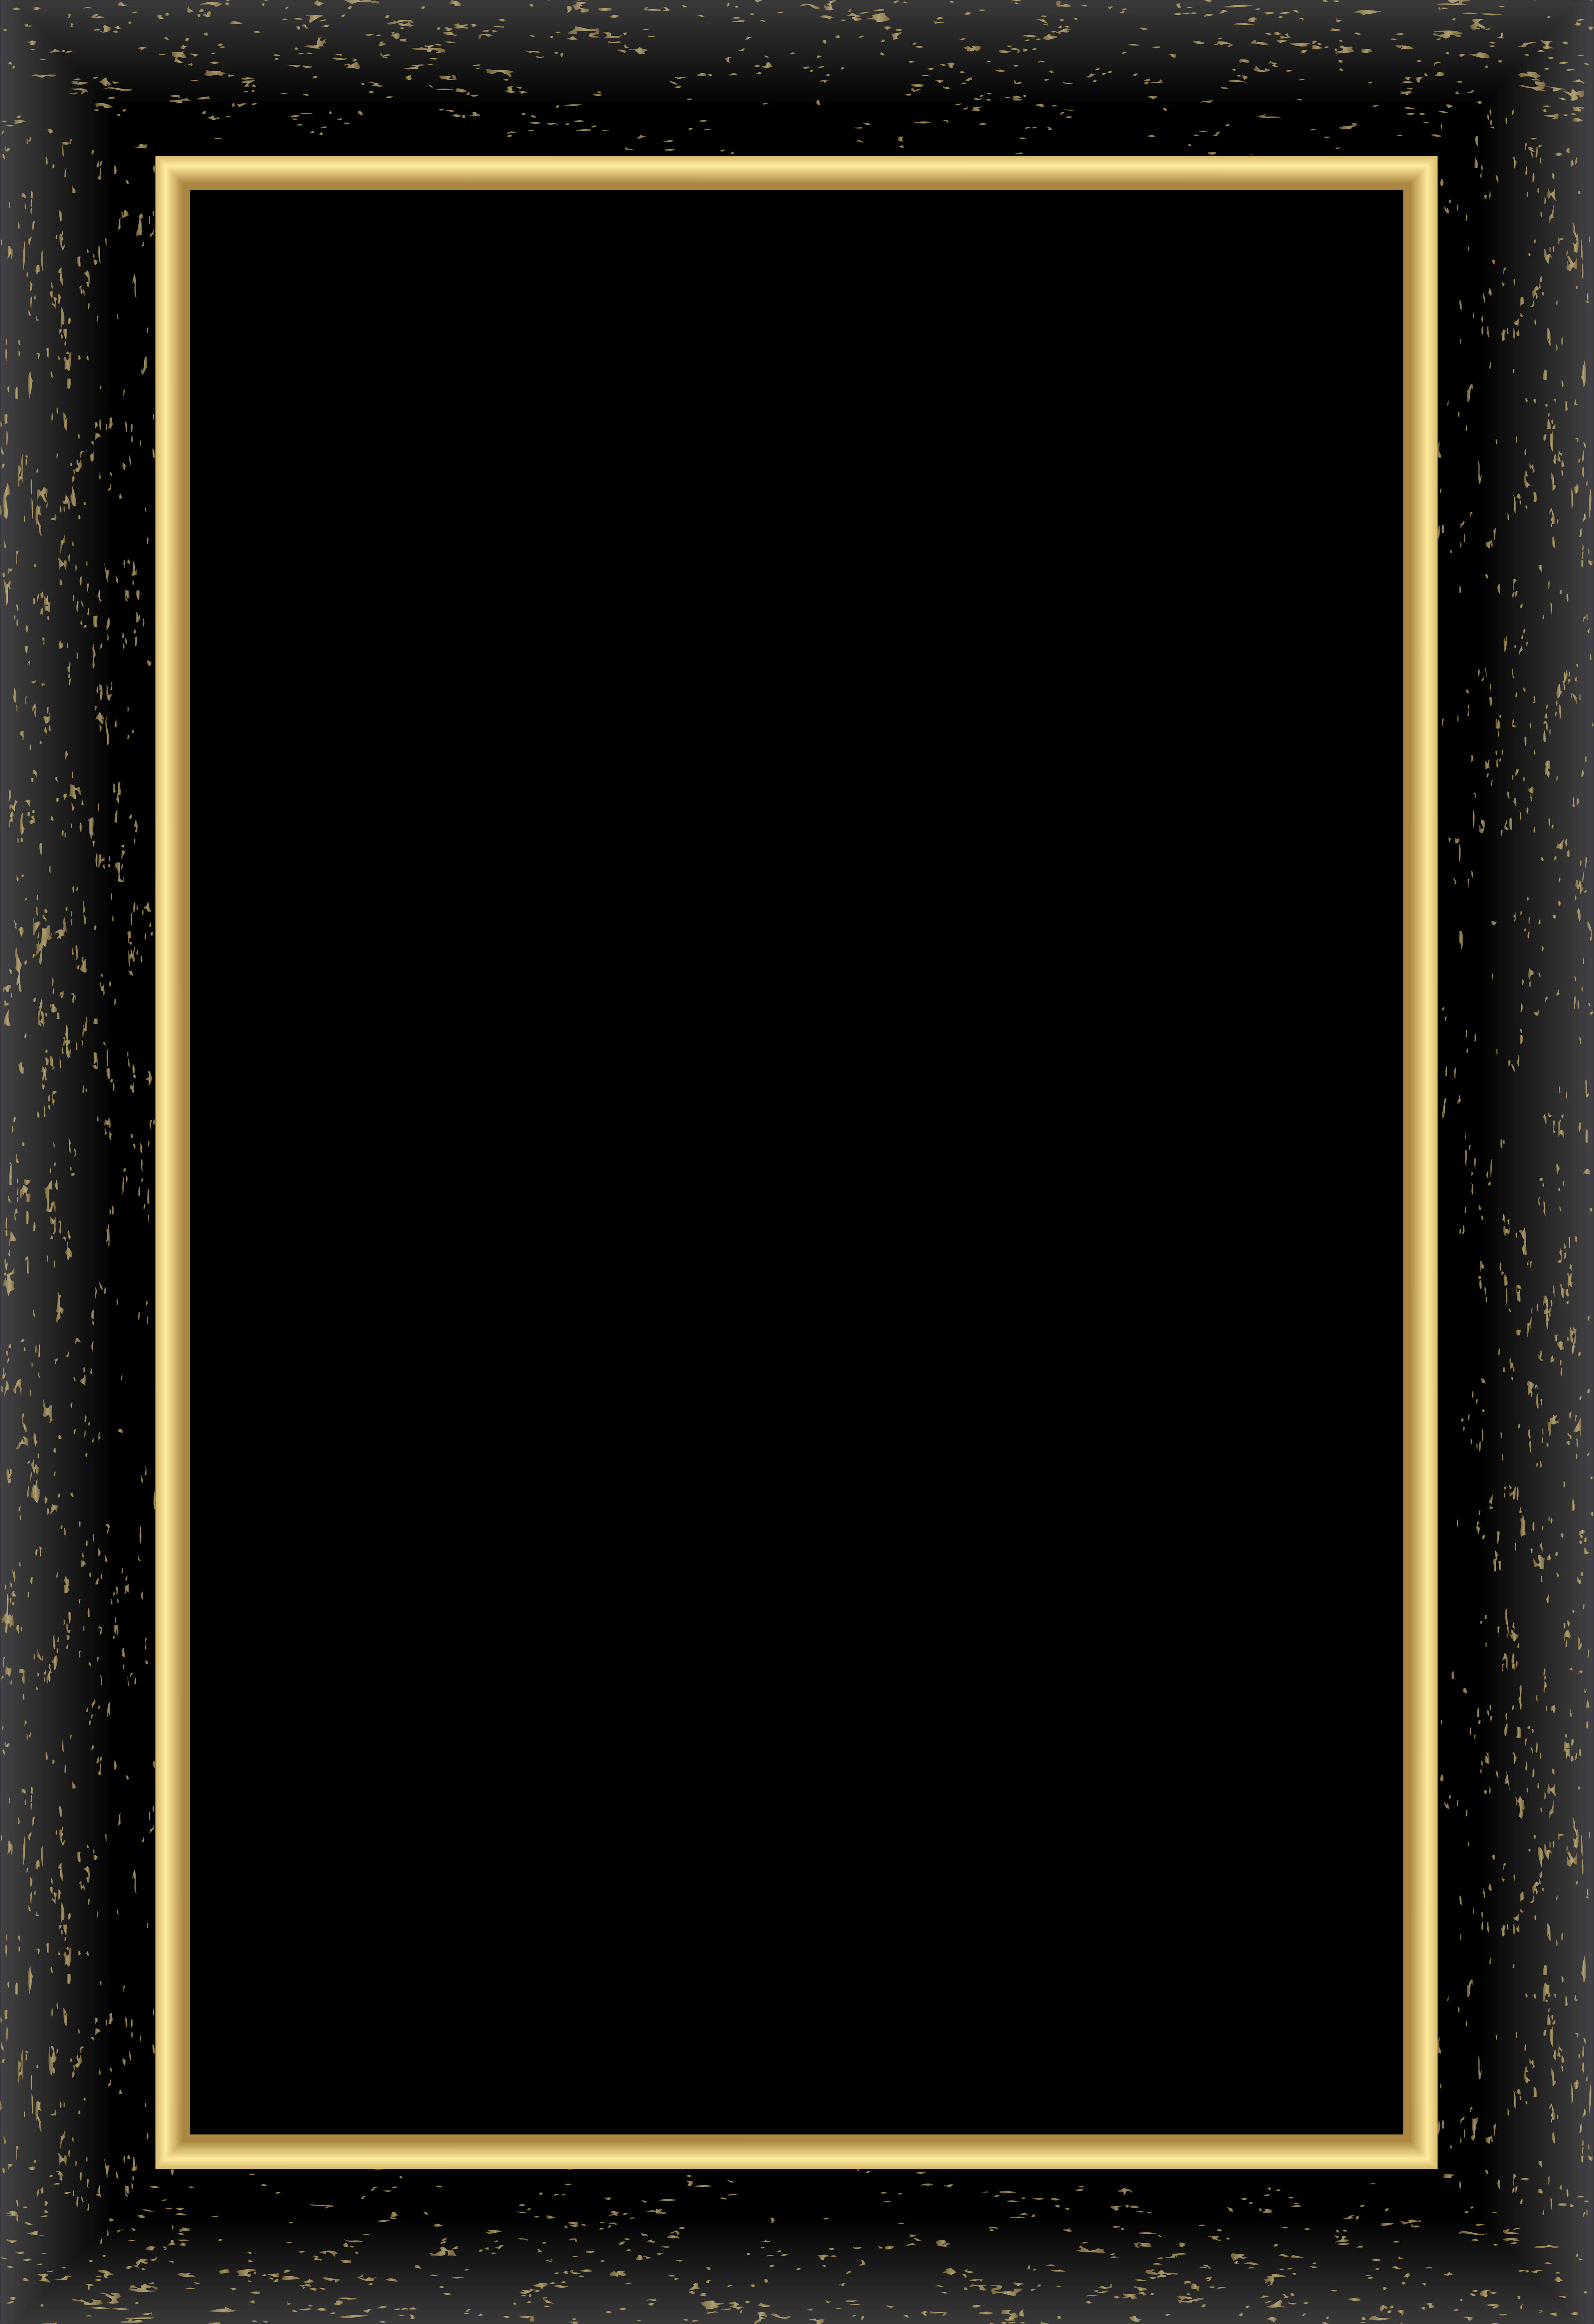 A Black And Gold Rectangular Frame